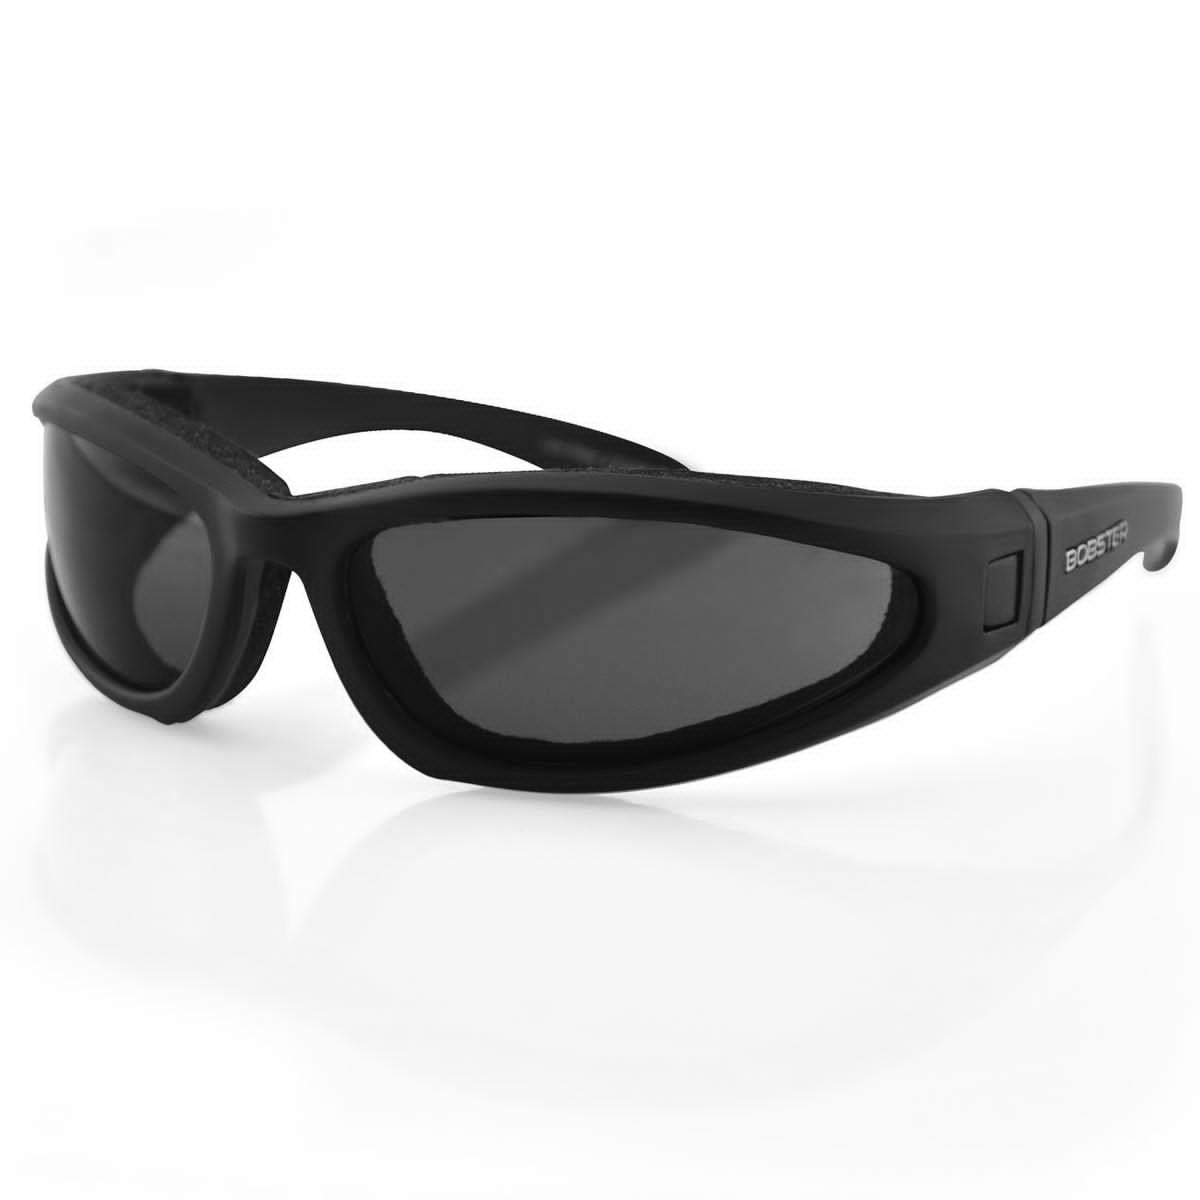 Bobster Low Rider II Convertible Sunglasses – American Legend Rider